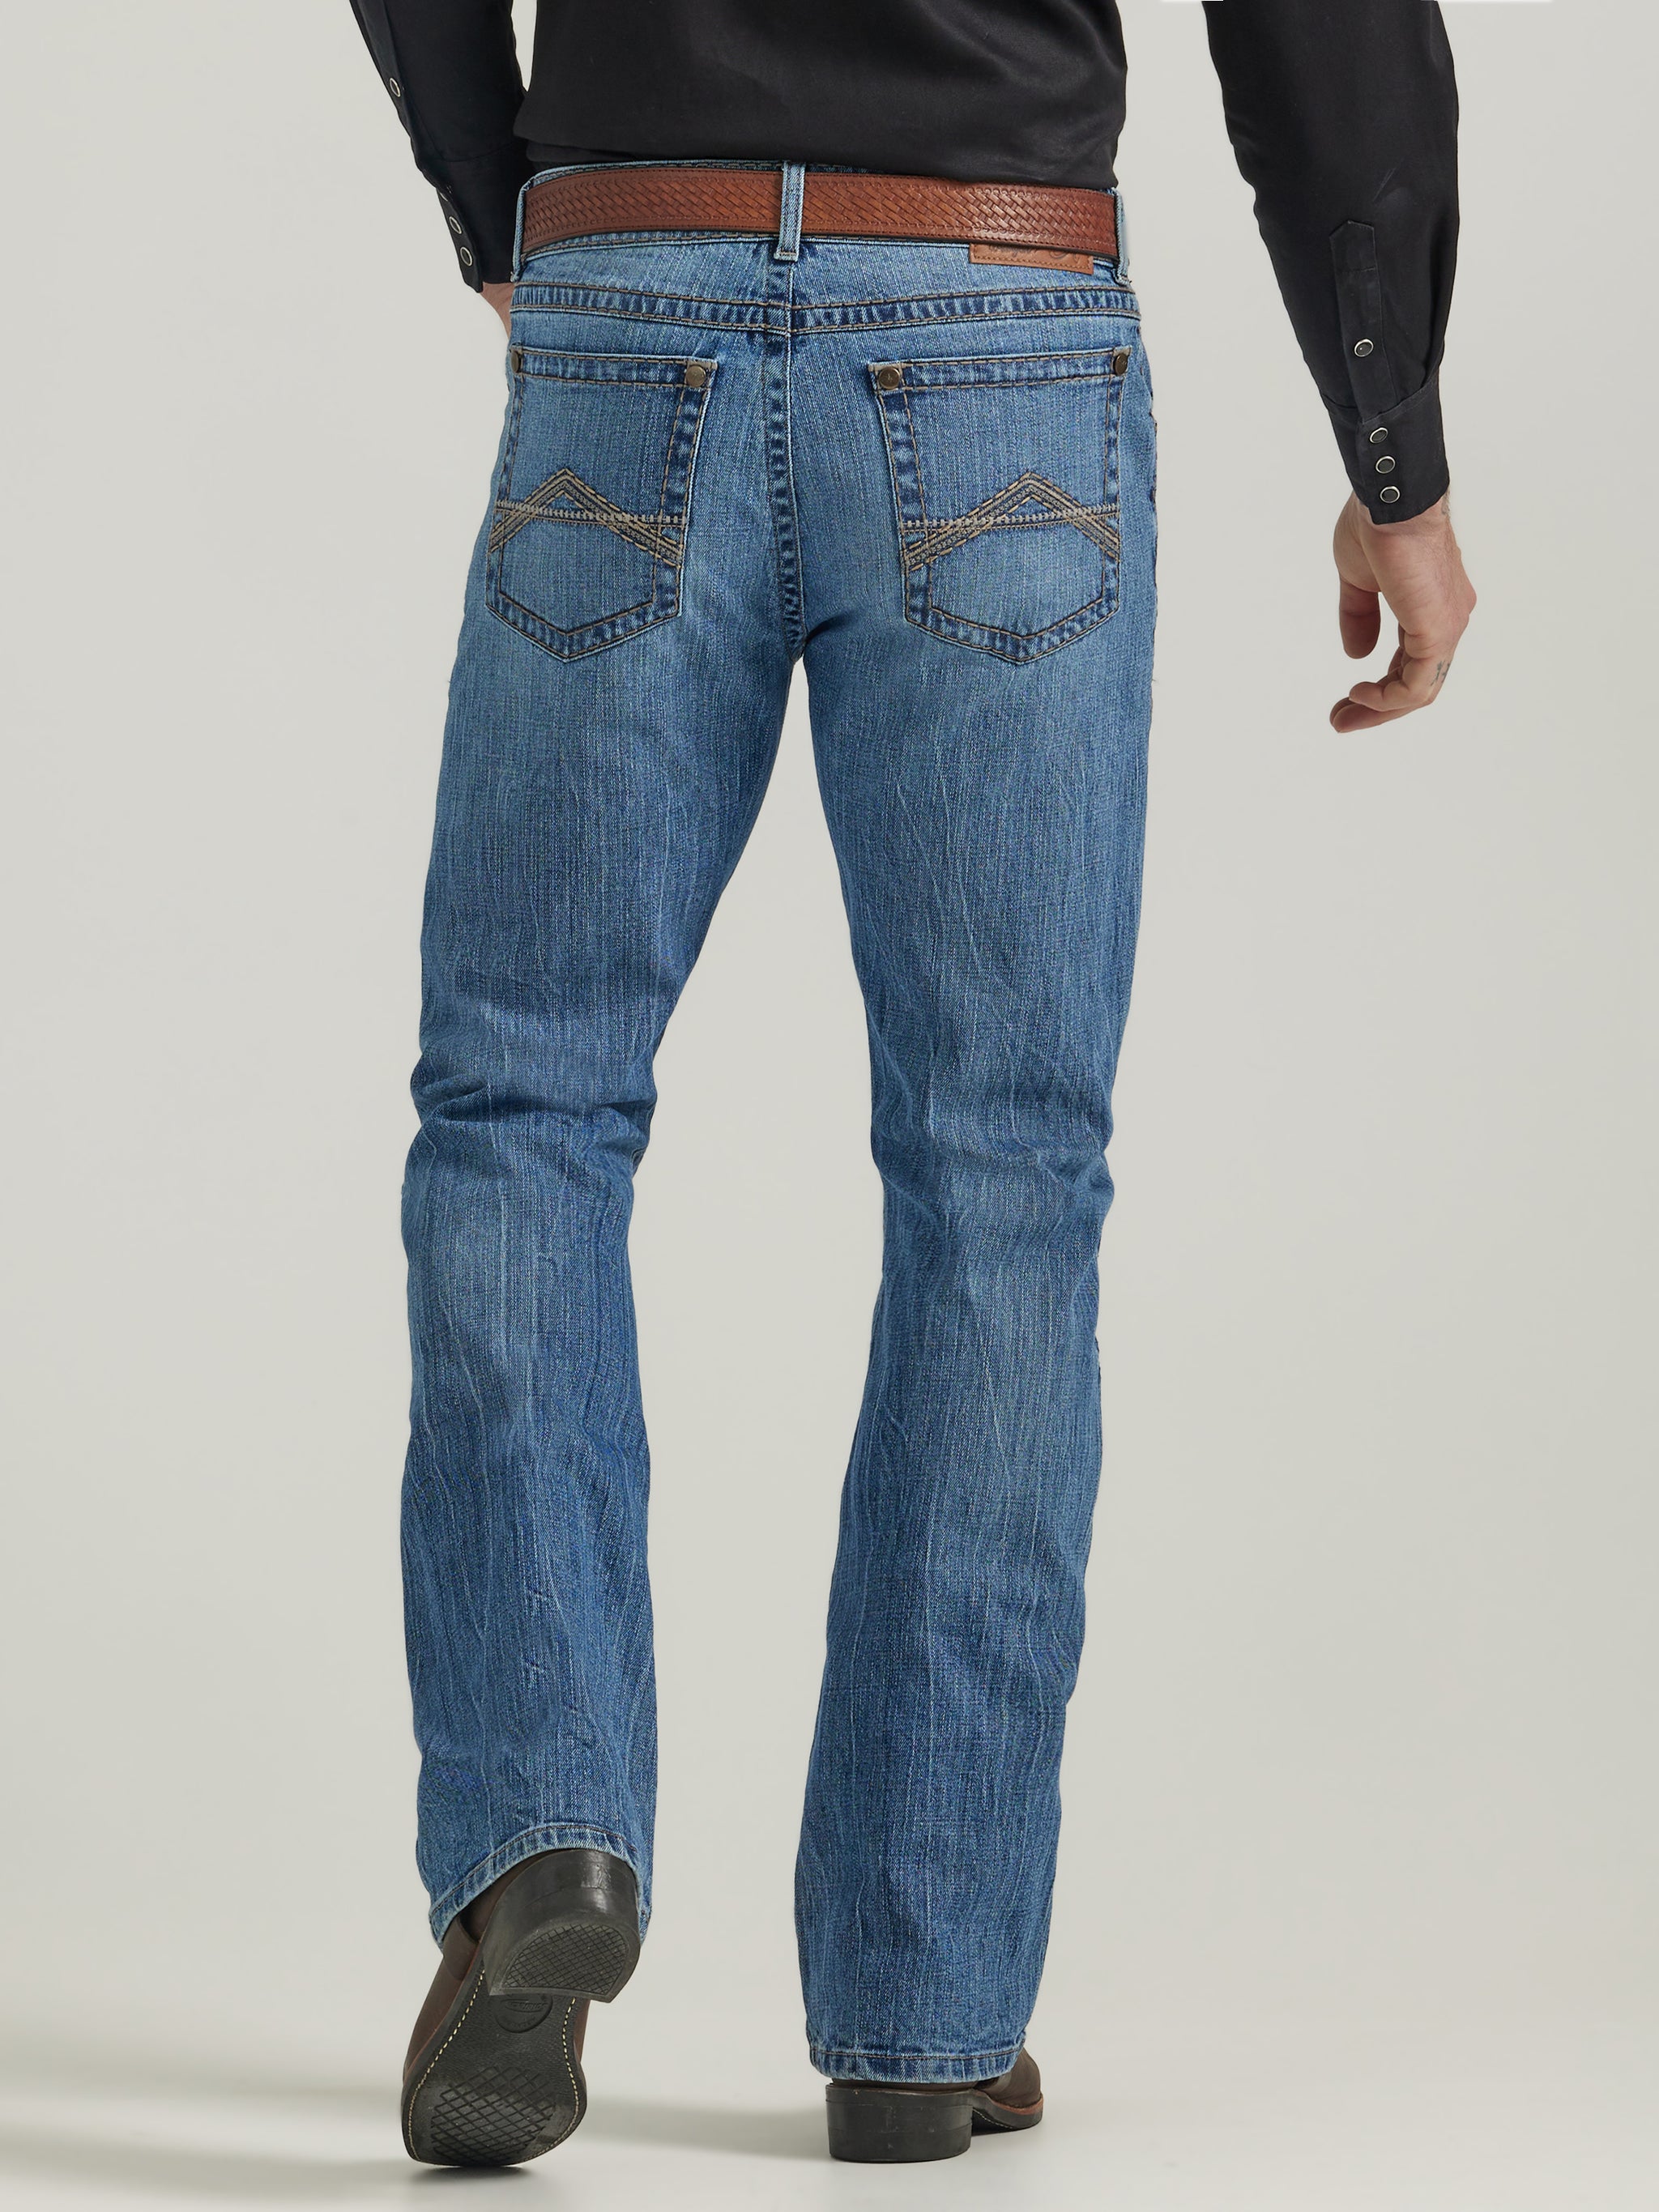 Kæledyr Påstået Ansøgning Men's Rock 47 By Wrangler Slim Fit Bootcut Jean in California Sunrise -  Mora's Jeans